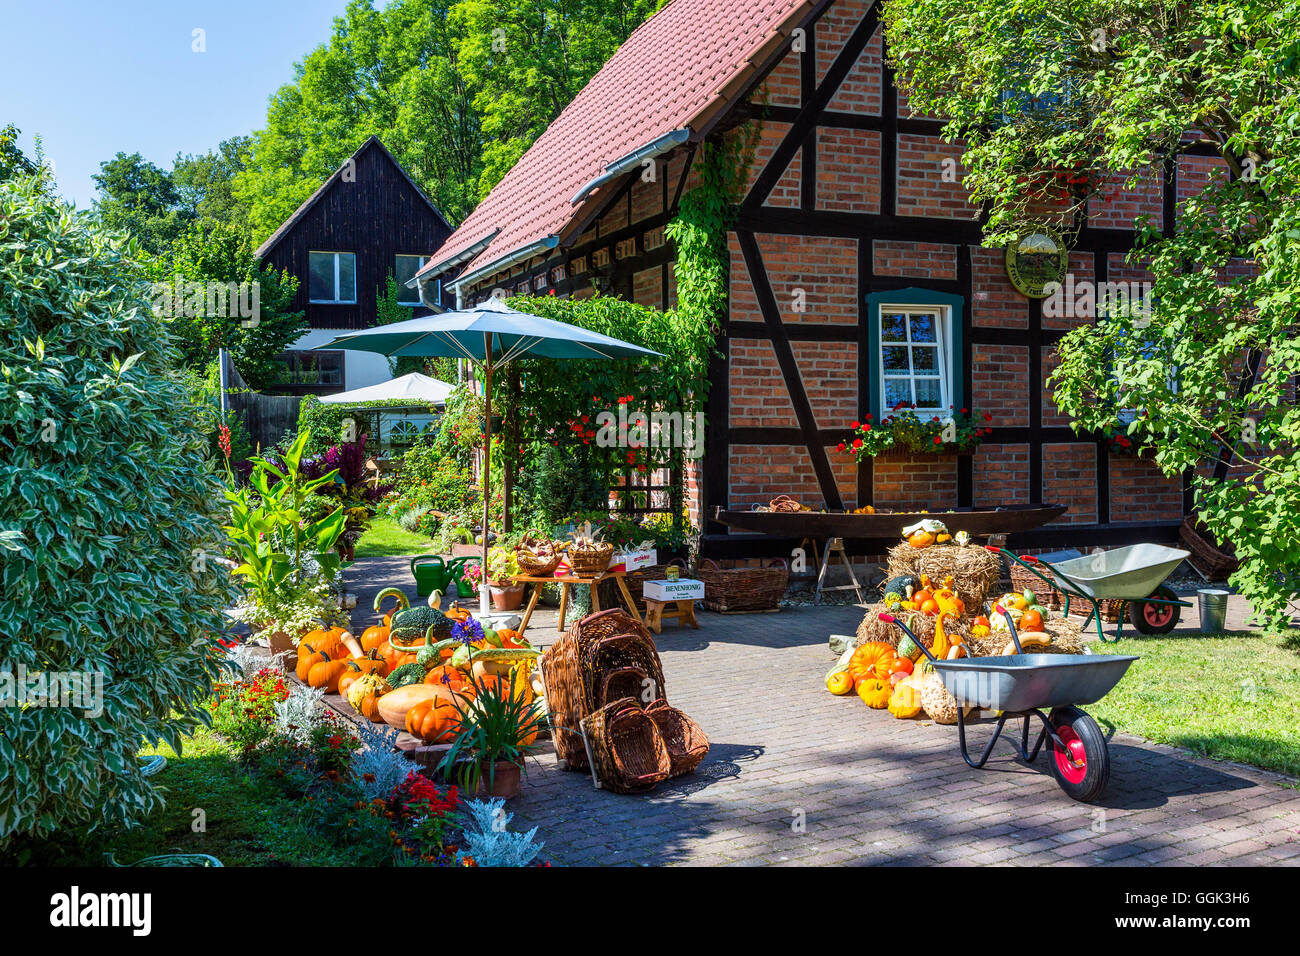 Farmhouse with garden in Lehde, Pumpkin harvest, Lehde, Spreewald, UNESCO biosphere reserve, Brandenburg, Germany, Europe Stock Photo